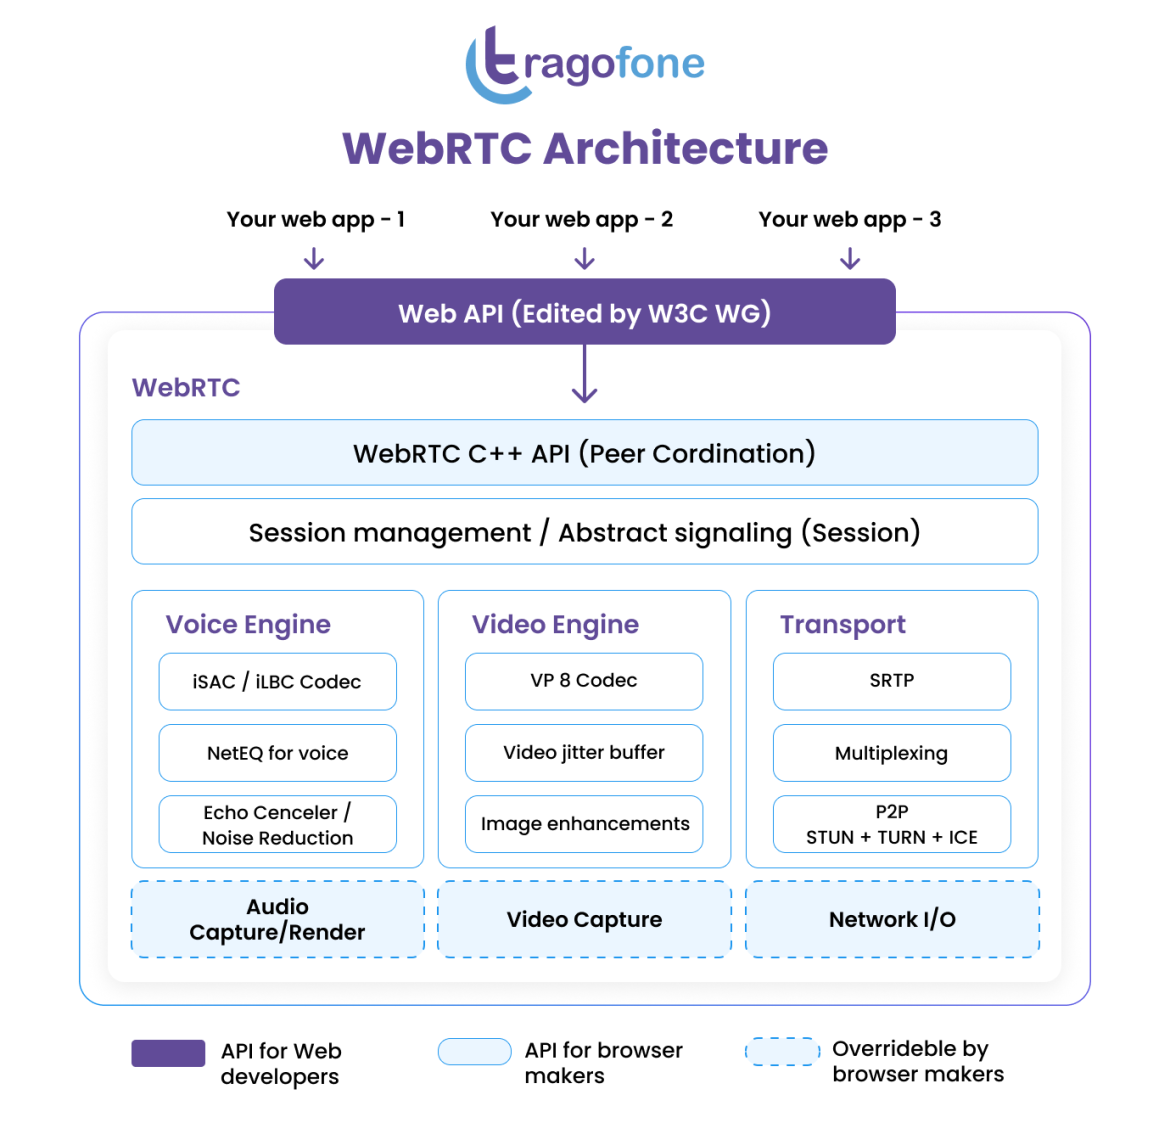 WebRTC architecture